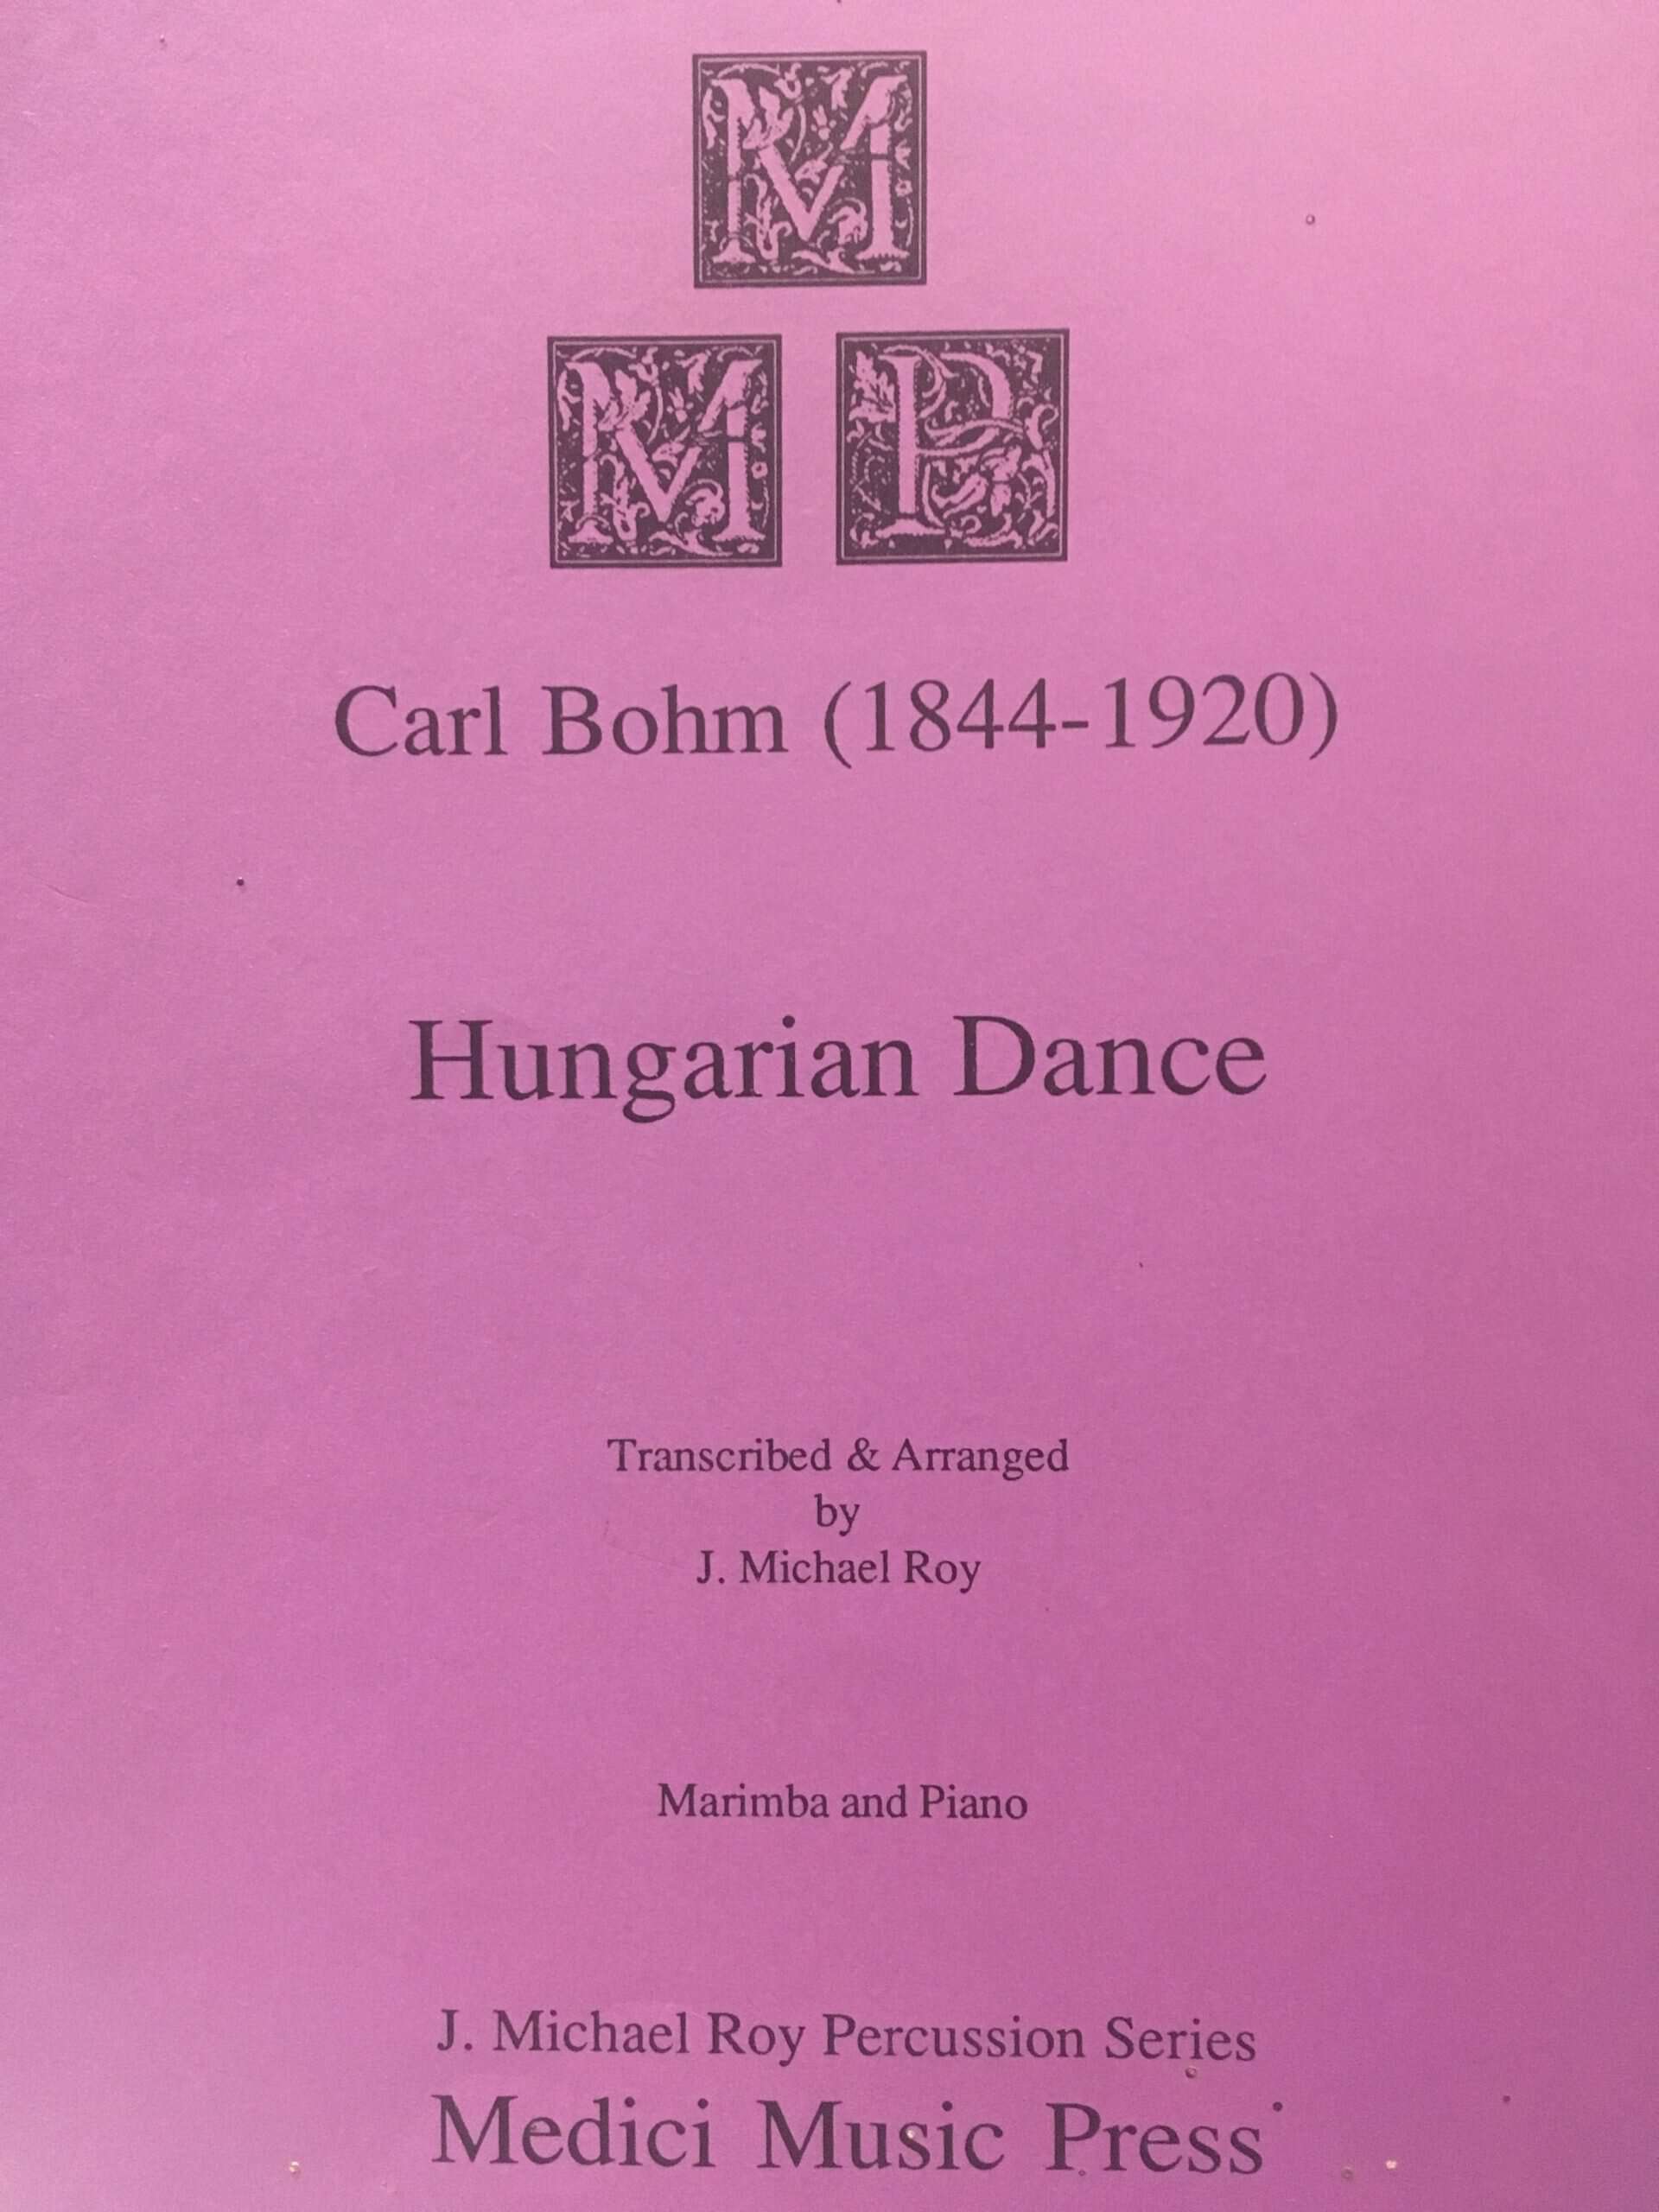 Hungarian Dance by Carl Bohm